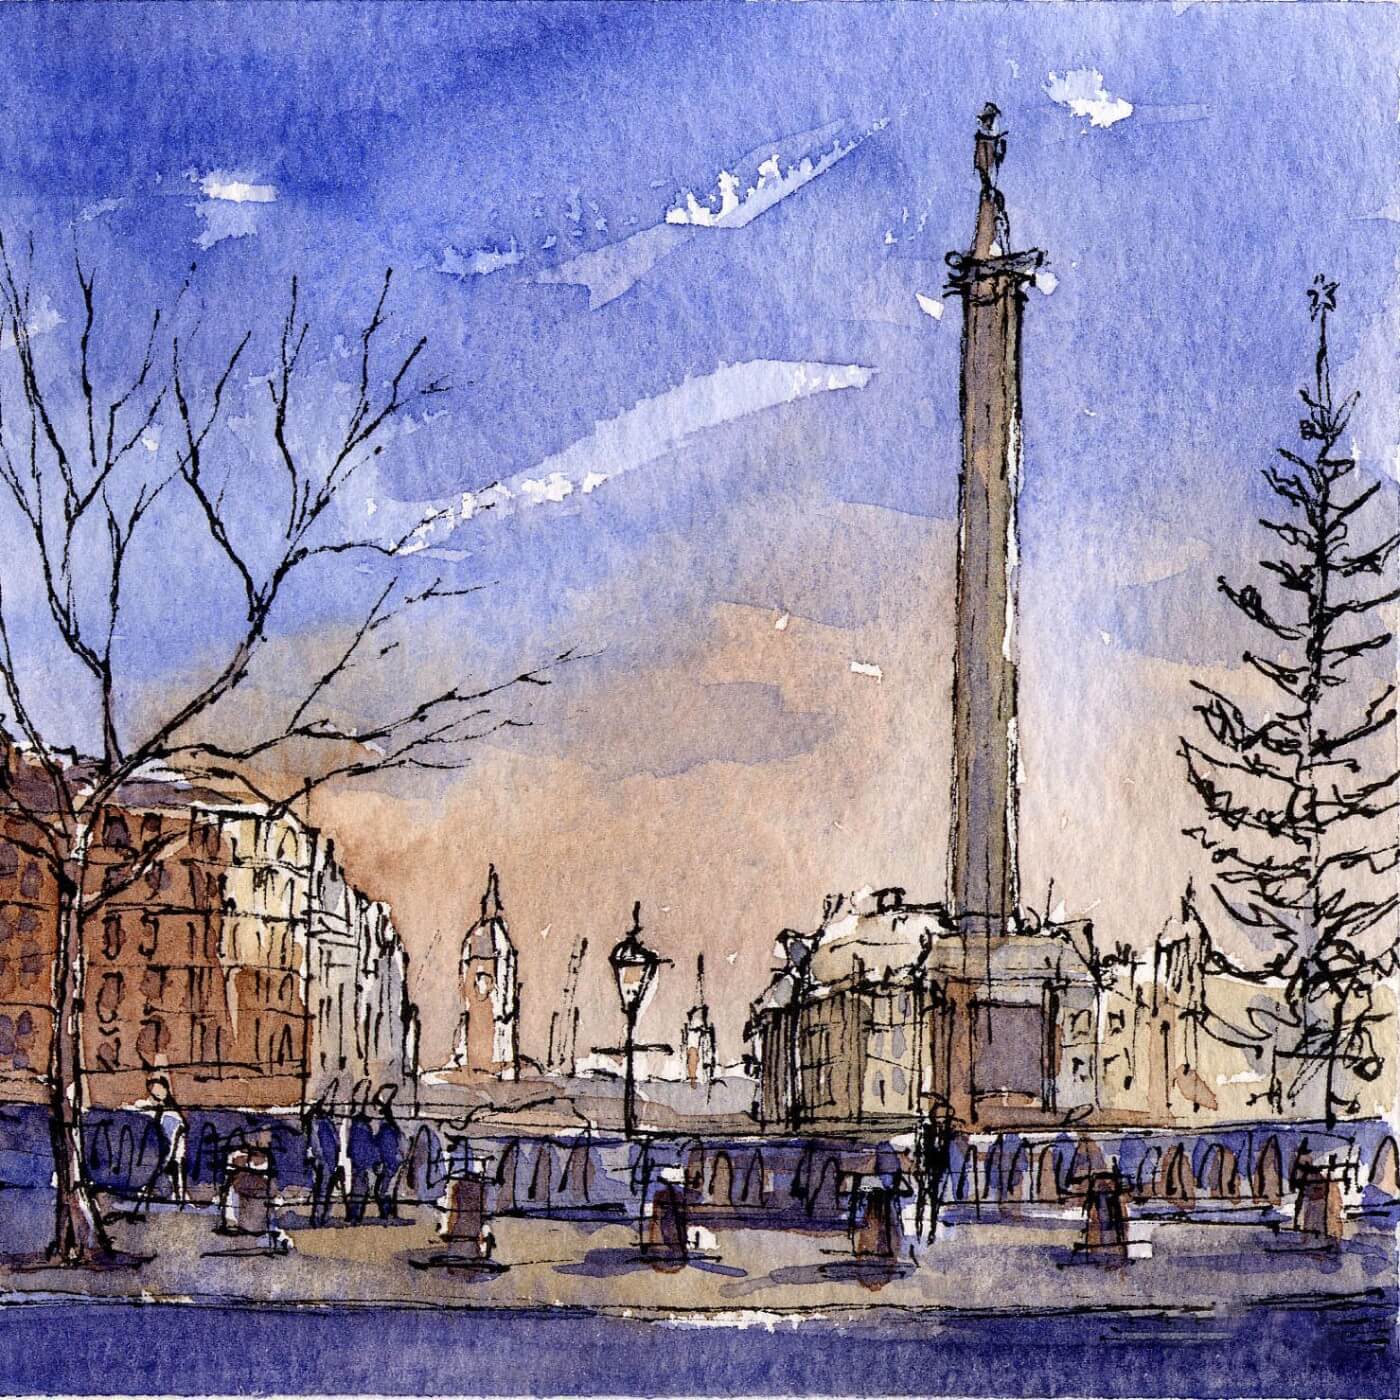 Trafalgar Square - Watercolor - London Photo and Painting